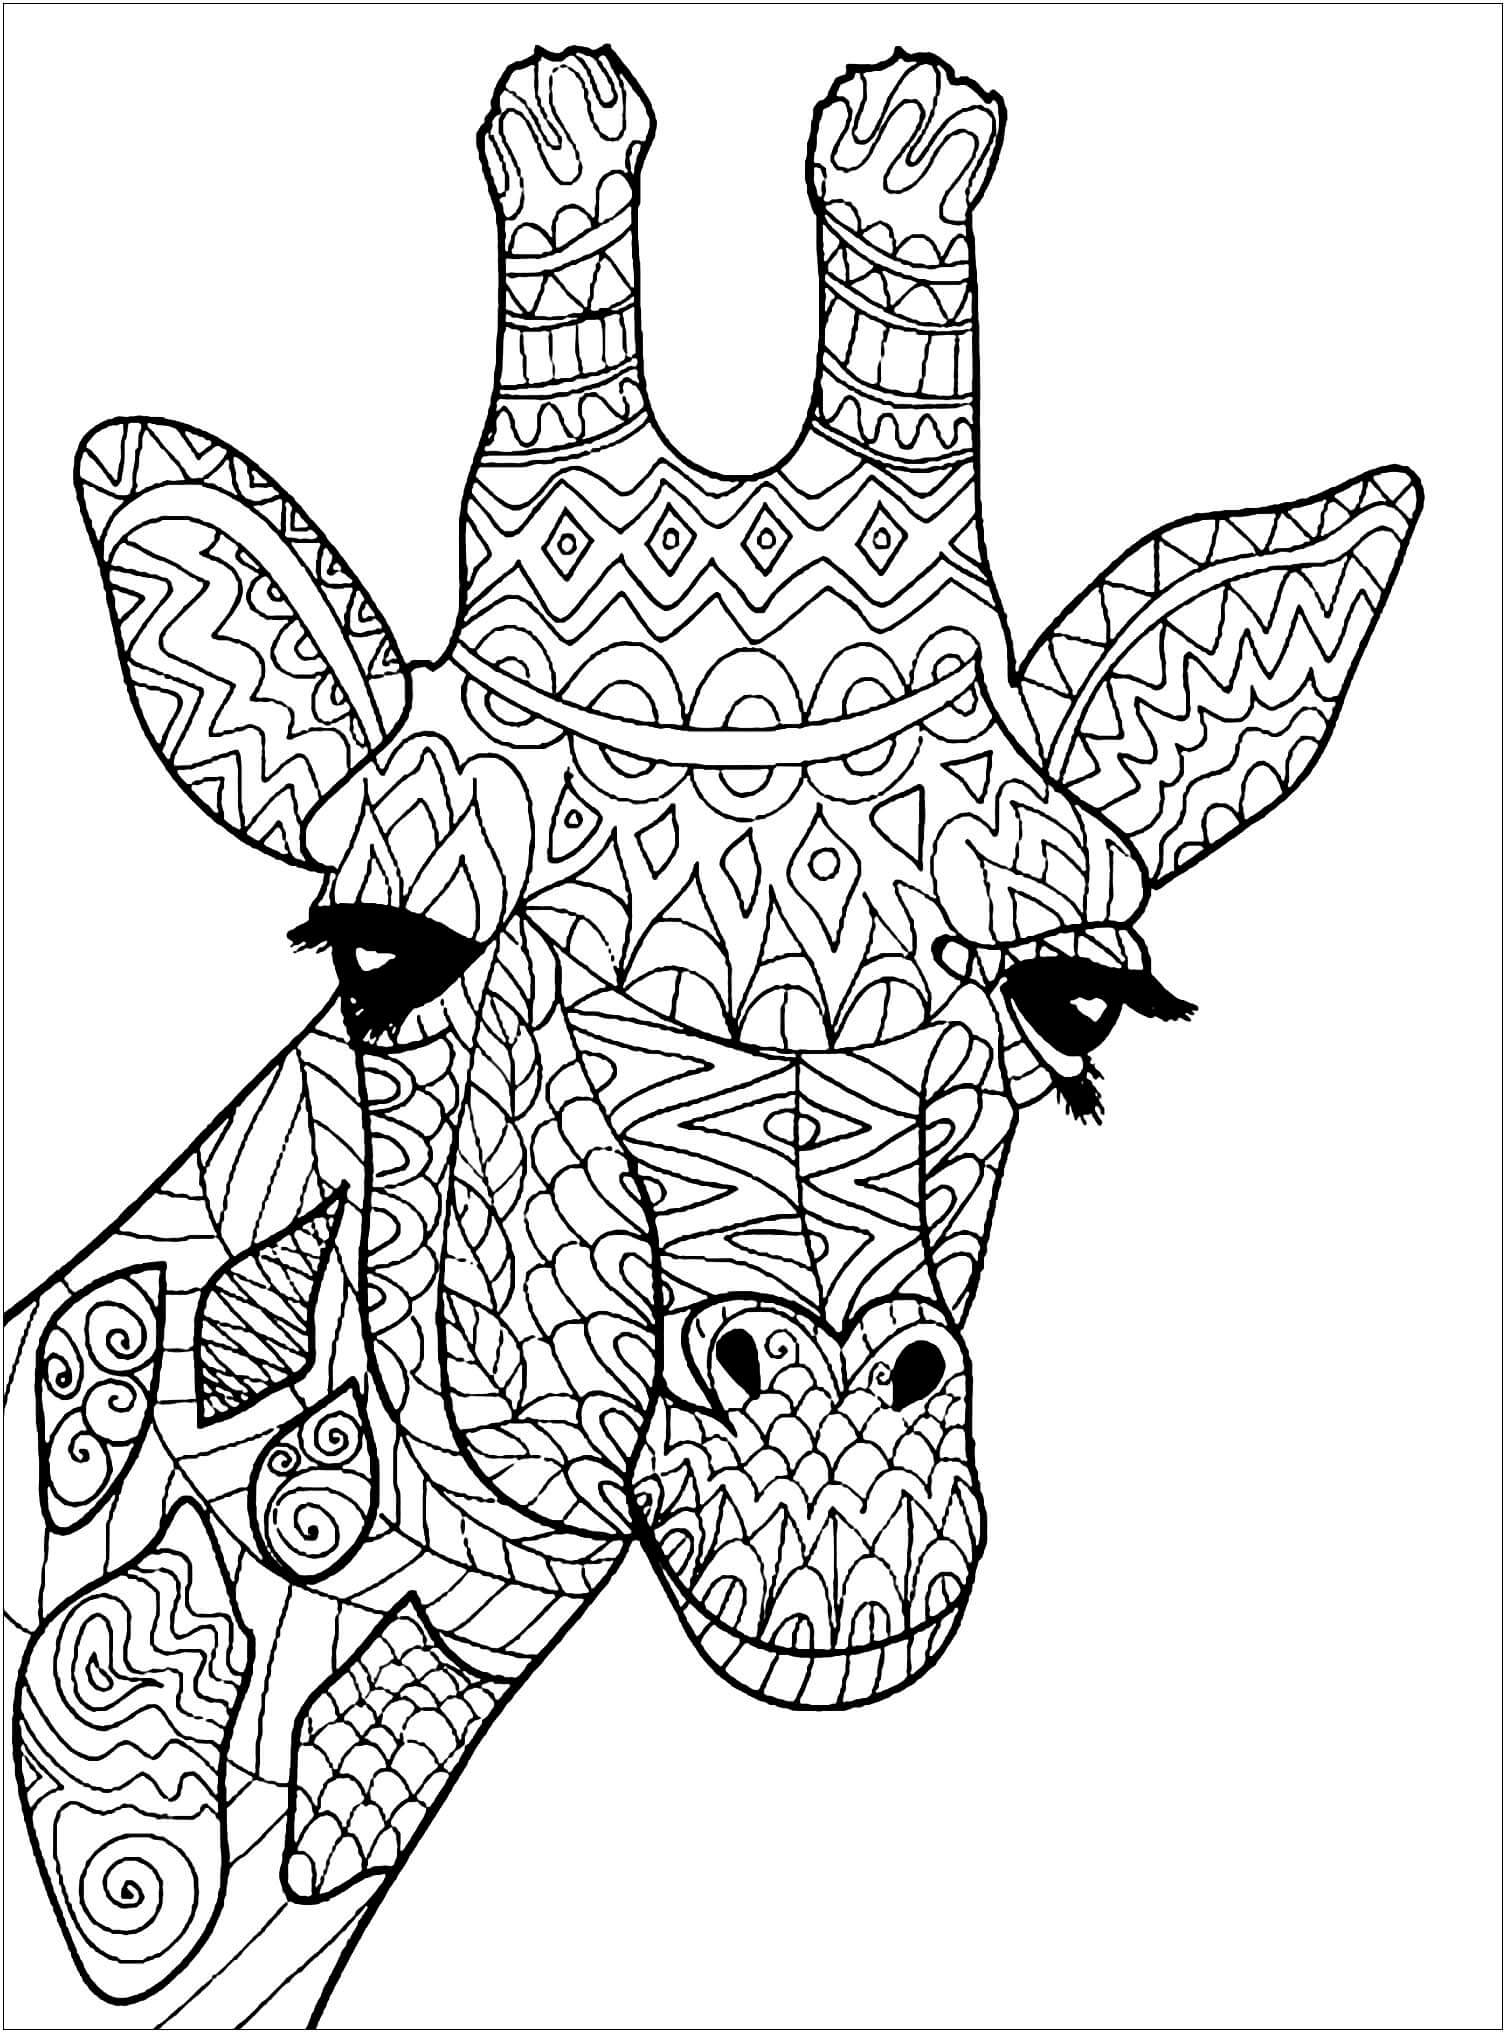 Mandala de Cabeça de Girafa para colorir